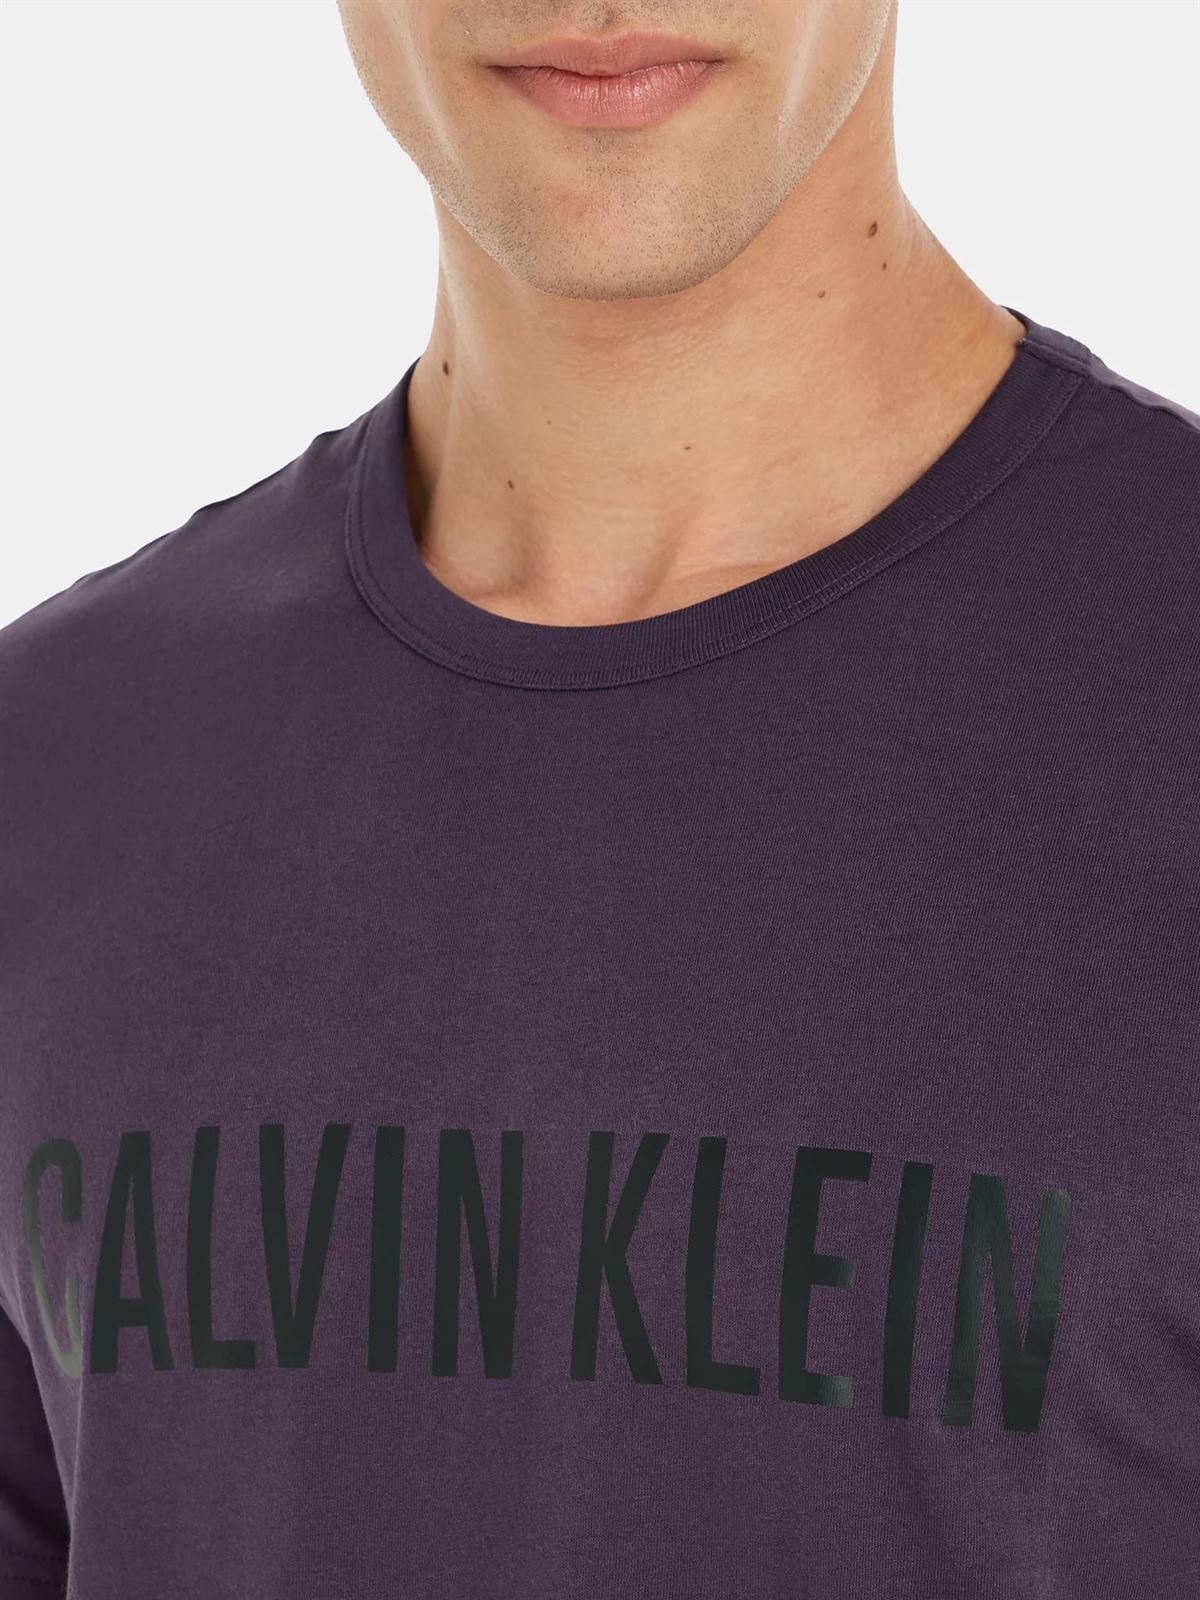 Camiseta Calvin Klein S/S Crew Neck 000NM1959E VE5 Mysterioso - Imagen 3